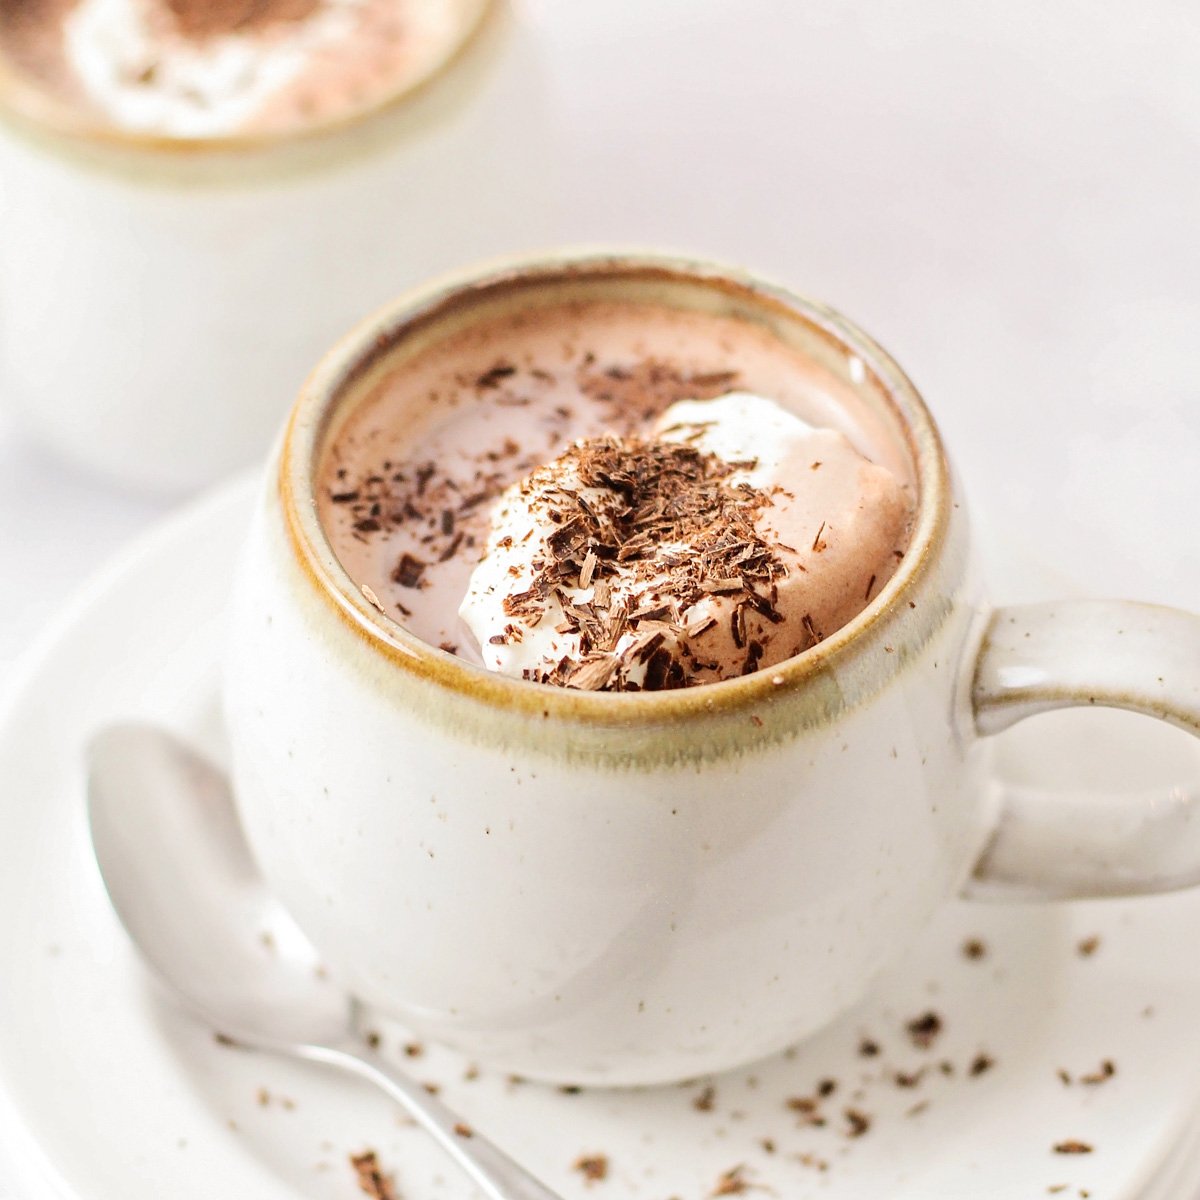 Hot chocolate recipe photo.